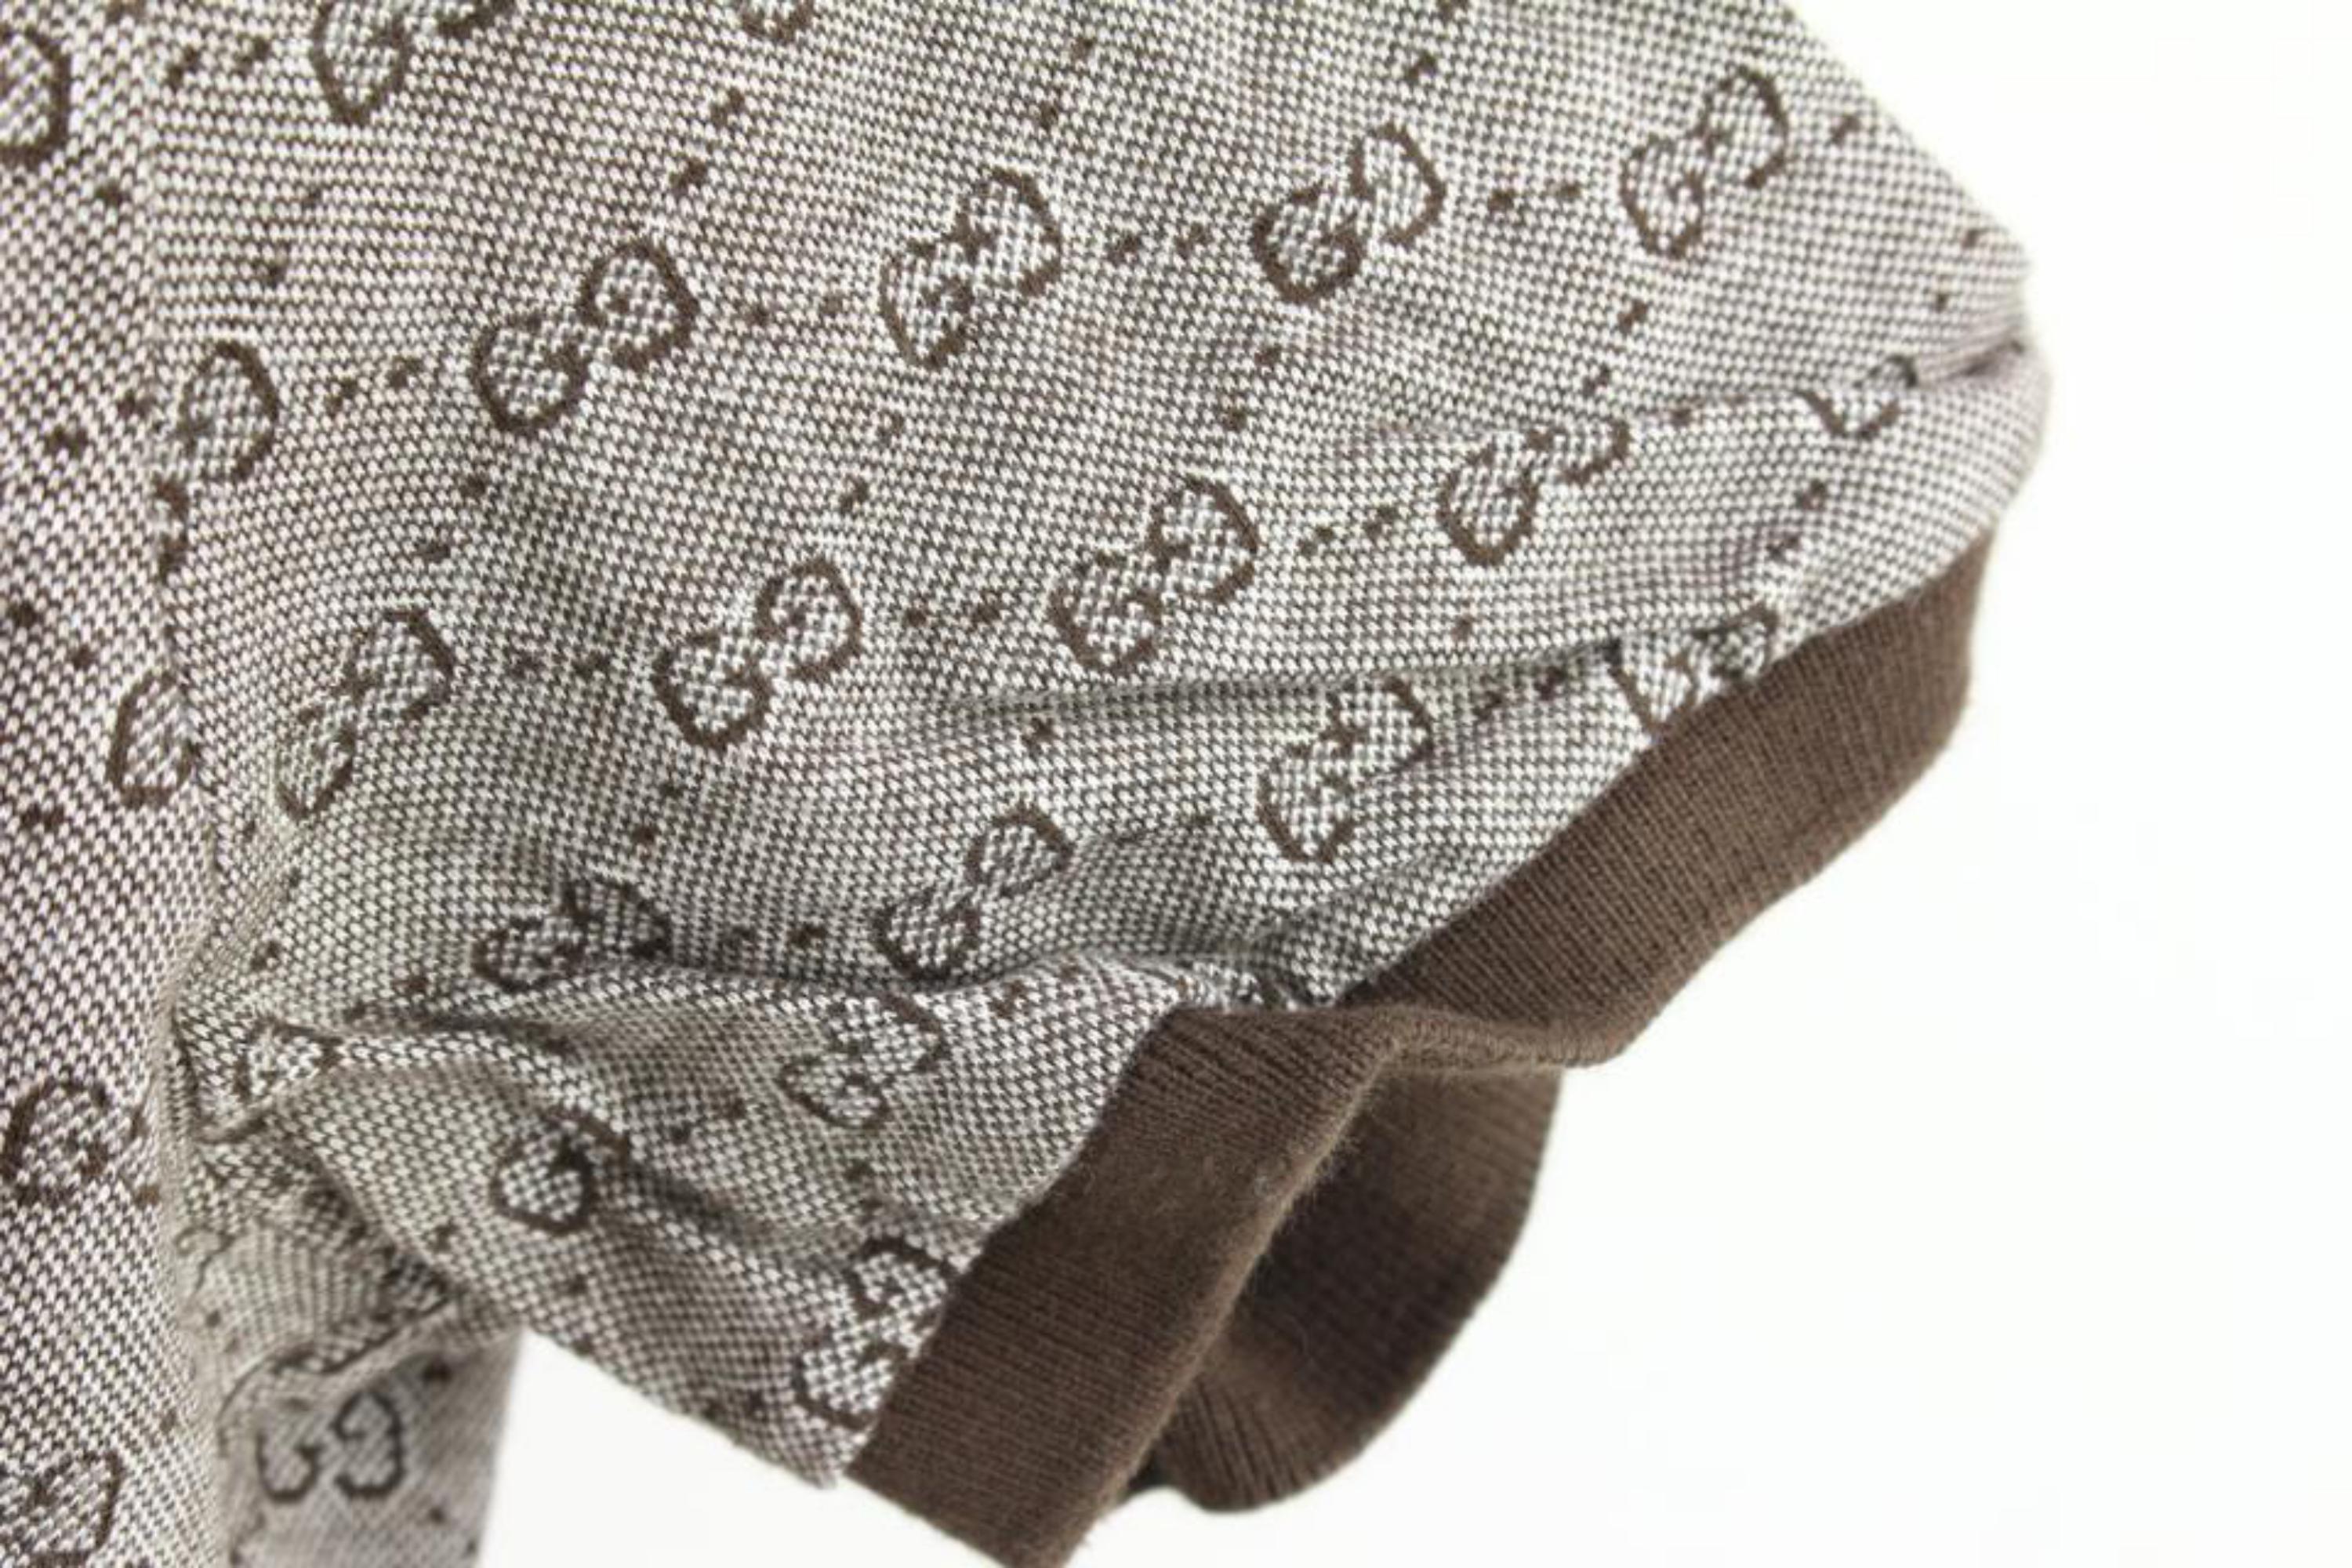 Gucci Men's M Brown Monogram GG Web Collar Polo Shirt Short Sleeve 76g422s 3